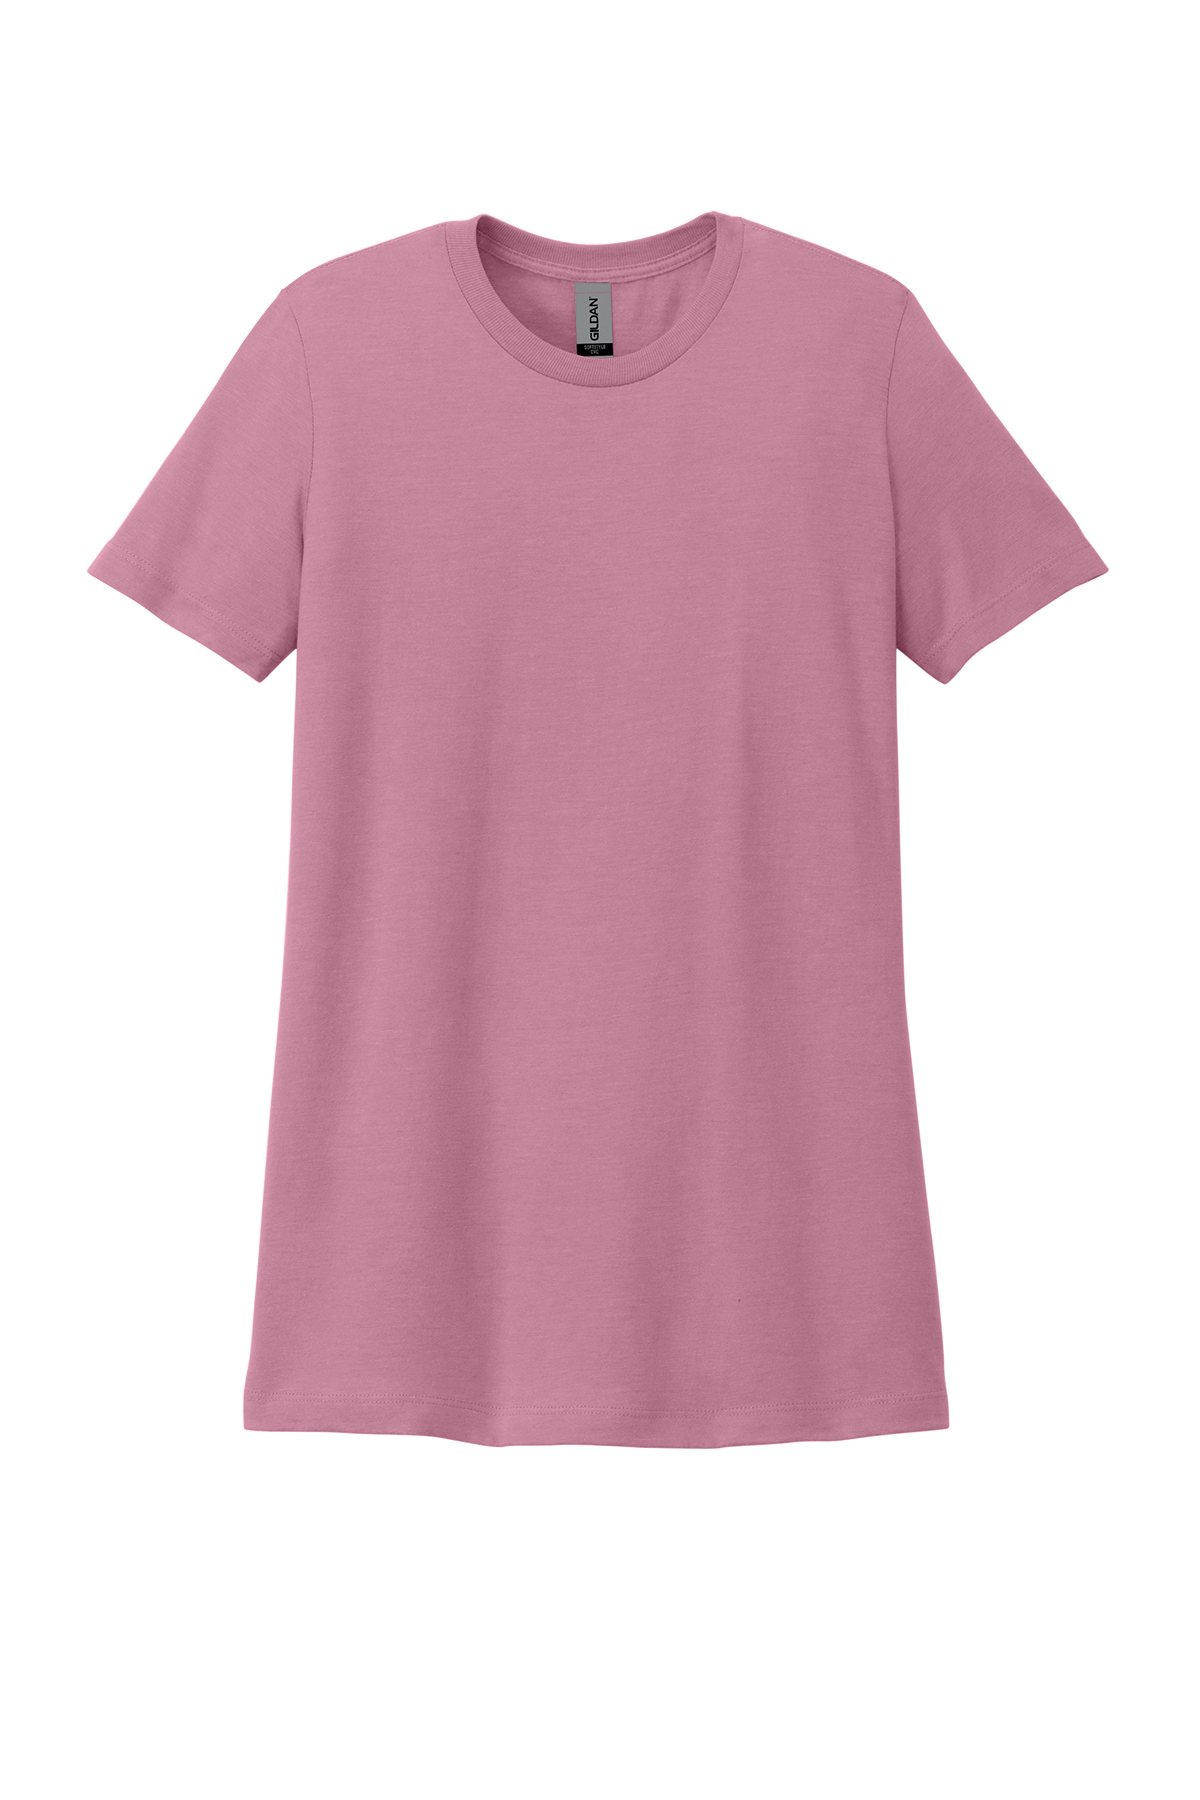 Gildan Softstyle Women's CVC T-Shirt, Product